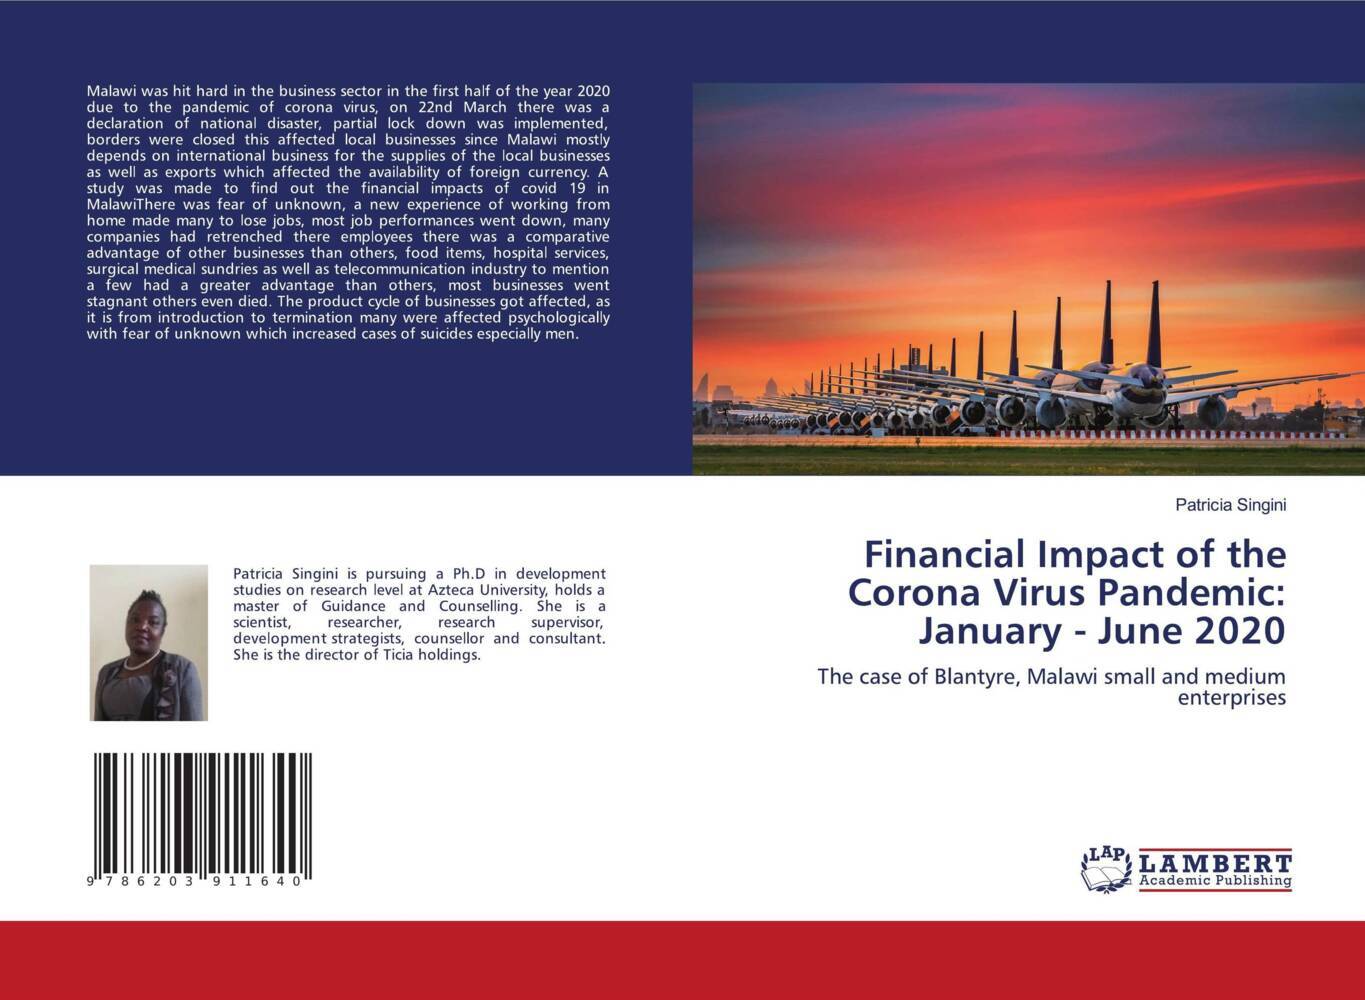 Financial Impact of the Corona Virus Pandemic: January - June 2020